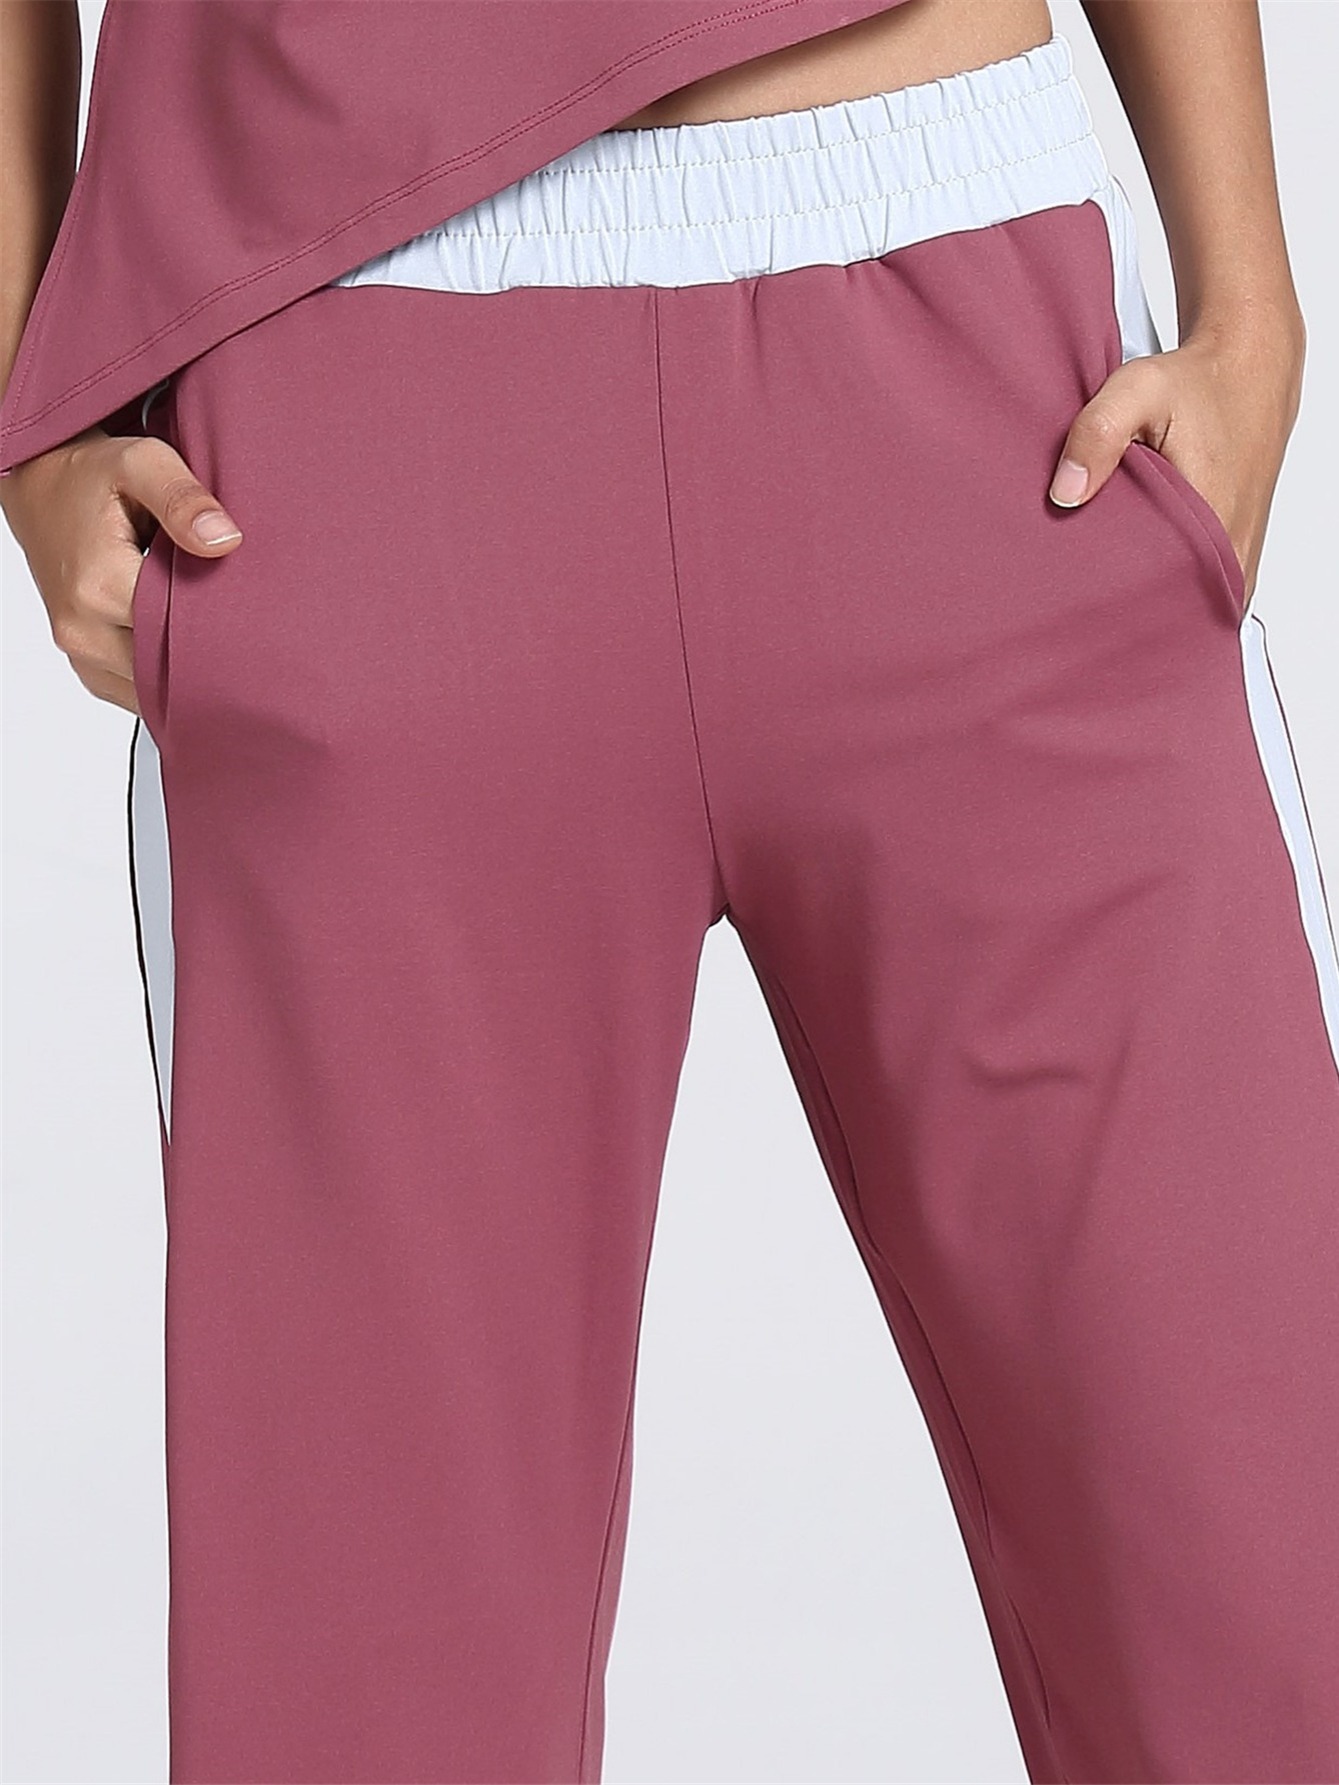 2 Pcs Women's Baggy Sweatpants Cinch Bottom Joggers Pants High Waist  Workout Lounge Pants